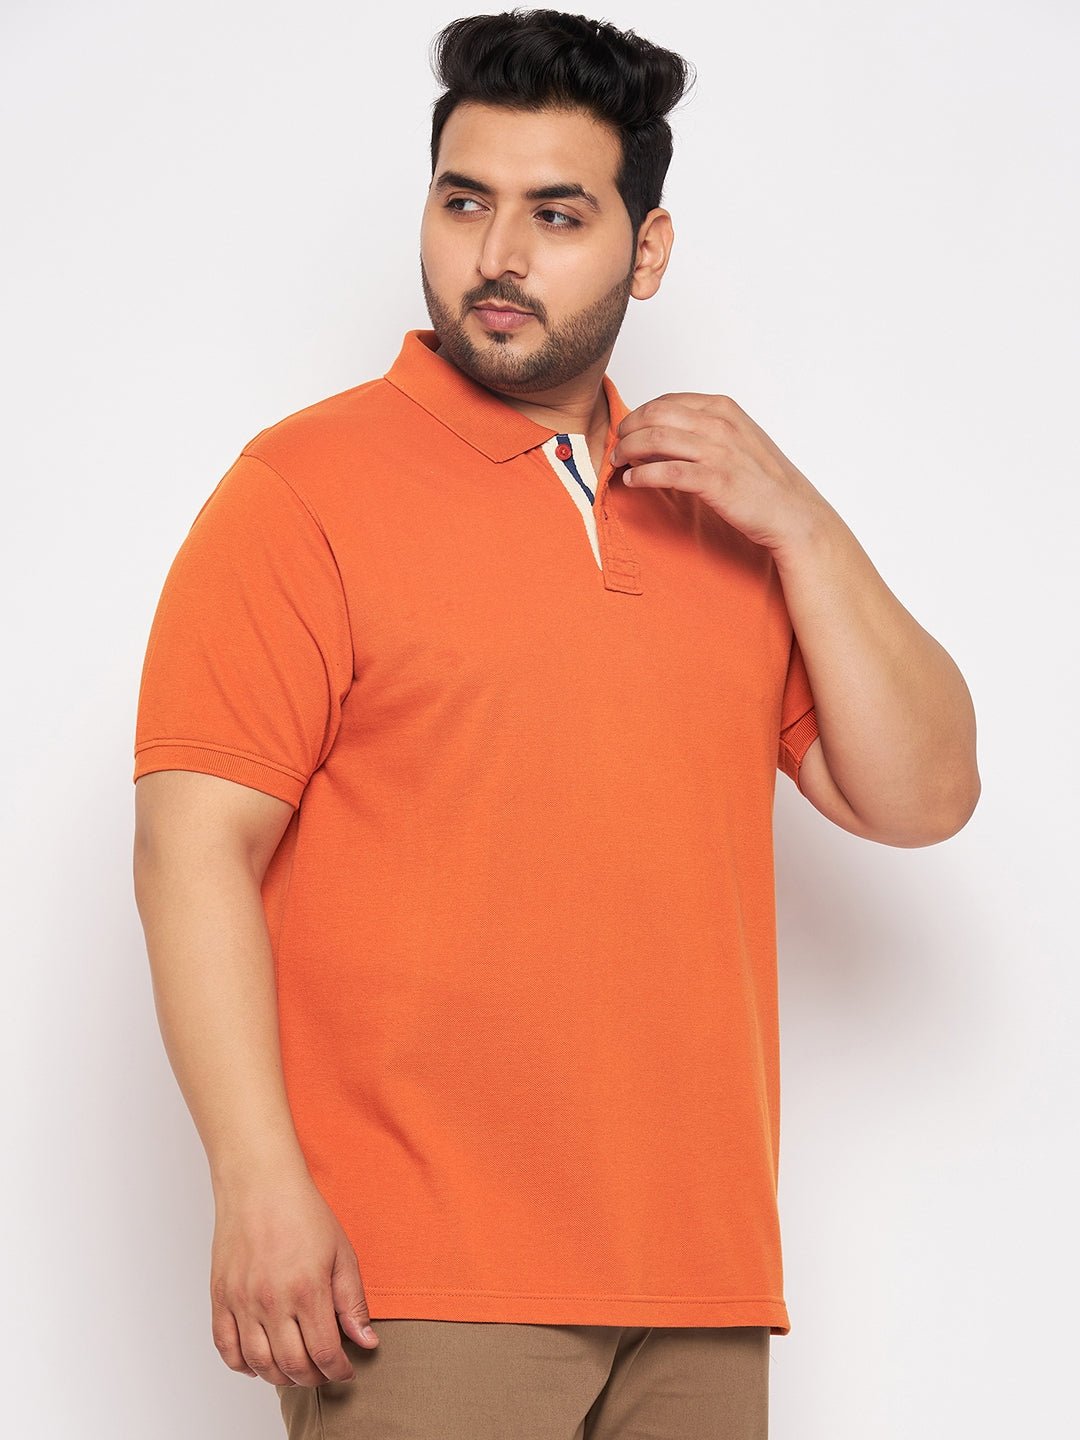 Plus Size Orange Polo T-Shirt - clubyork